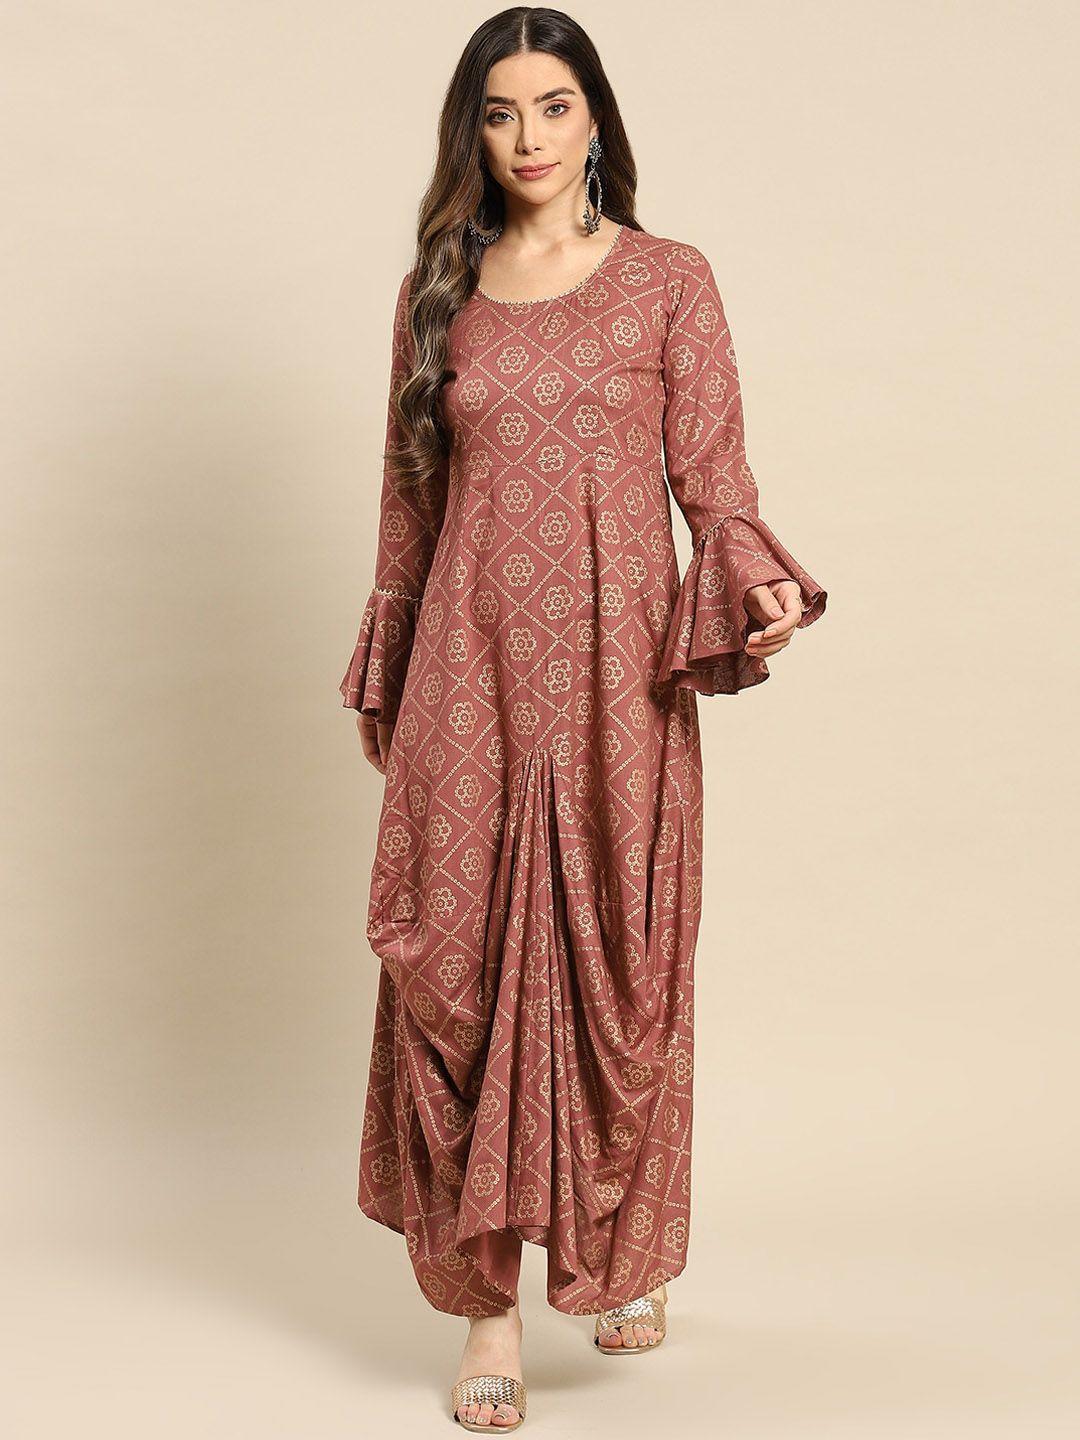 mabish by sonal jain bandhani printed bell sleeves a-line ethnic dress